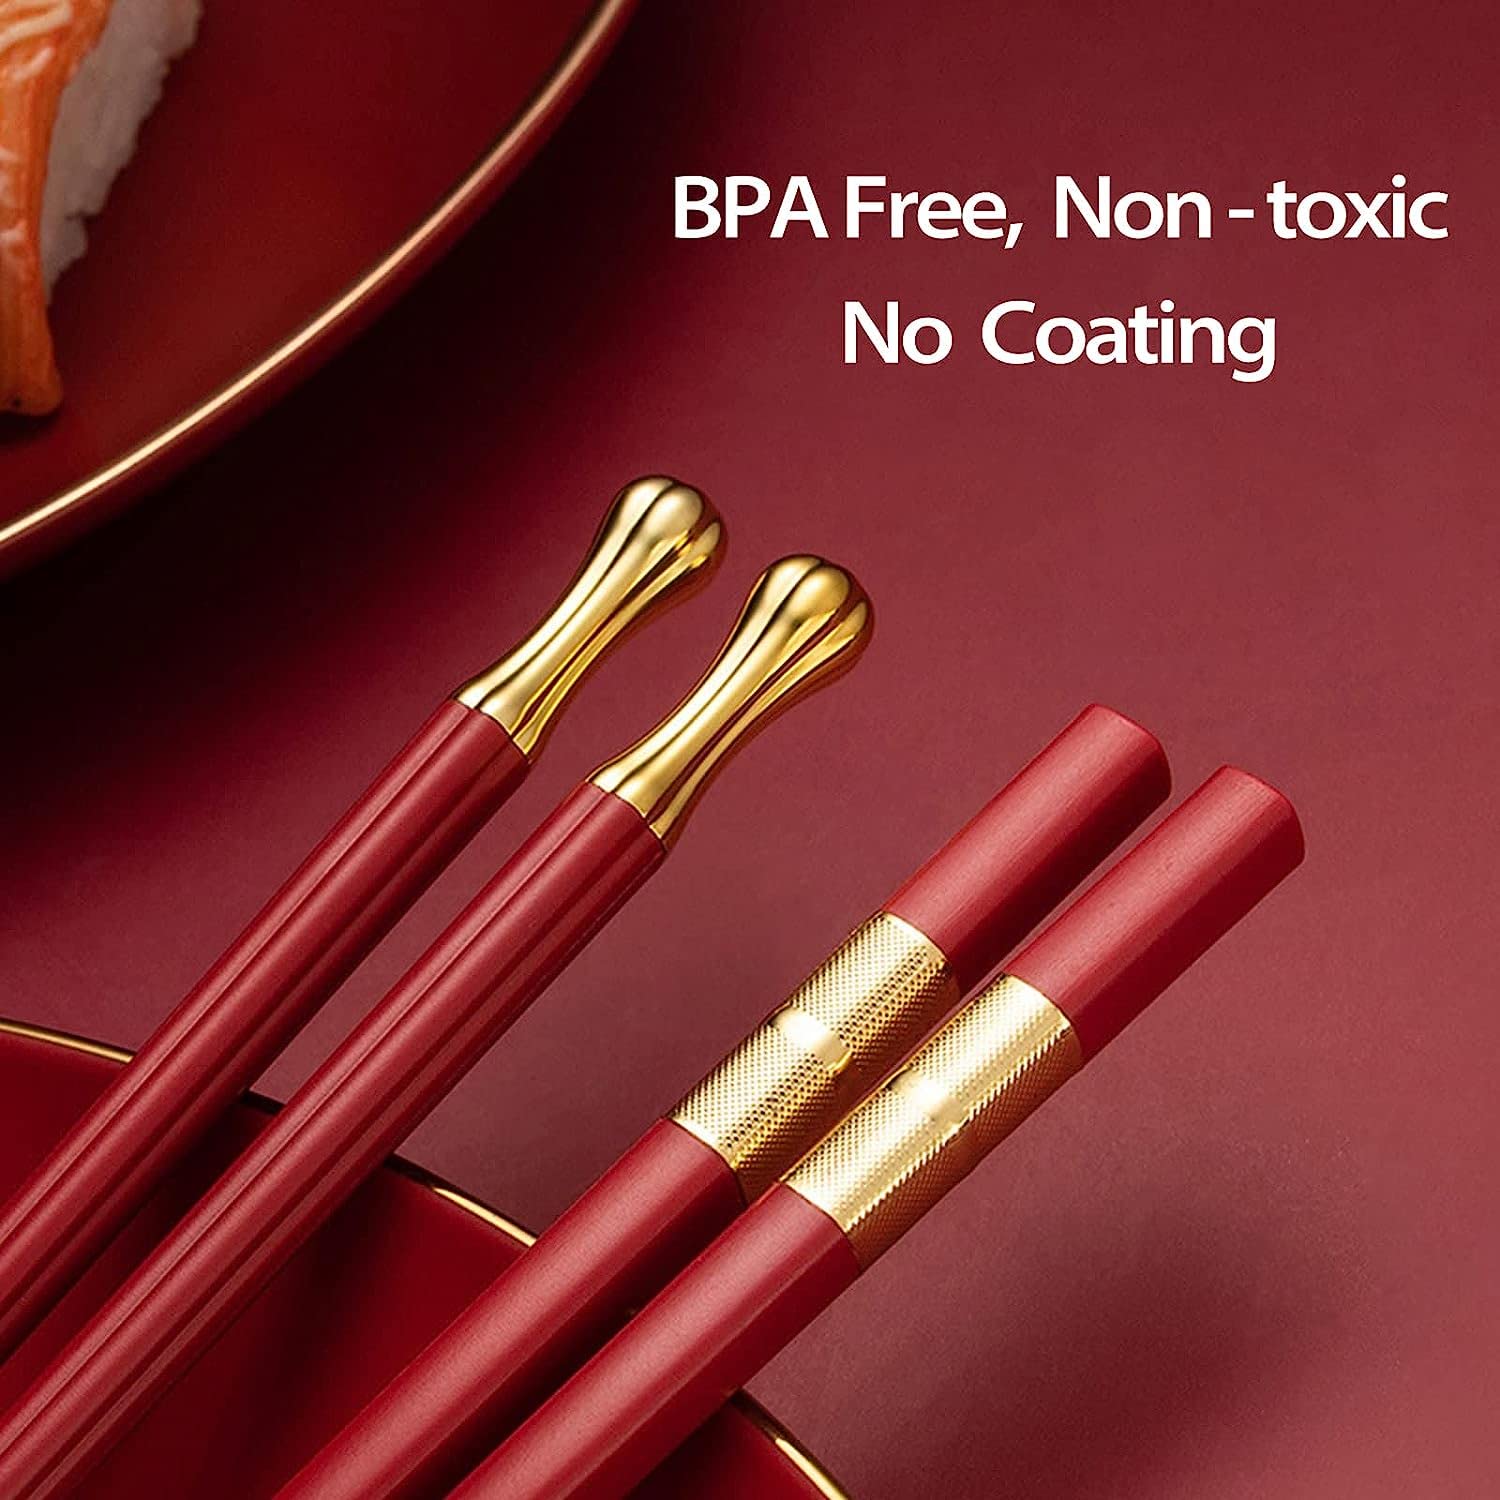 6 Pairs Red Chopsticks, Chinese Reusable Chopsticks Dishwasher Saf, 9.6in/24.3cm Anti-Slip Chop Sticks Fiberglass for Family